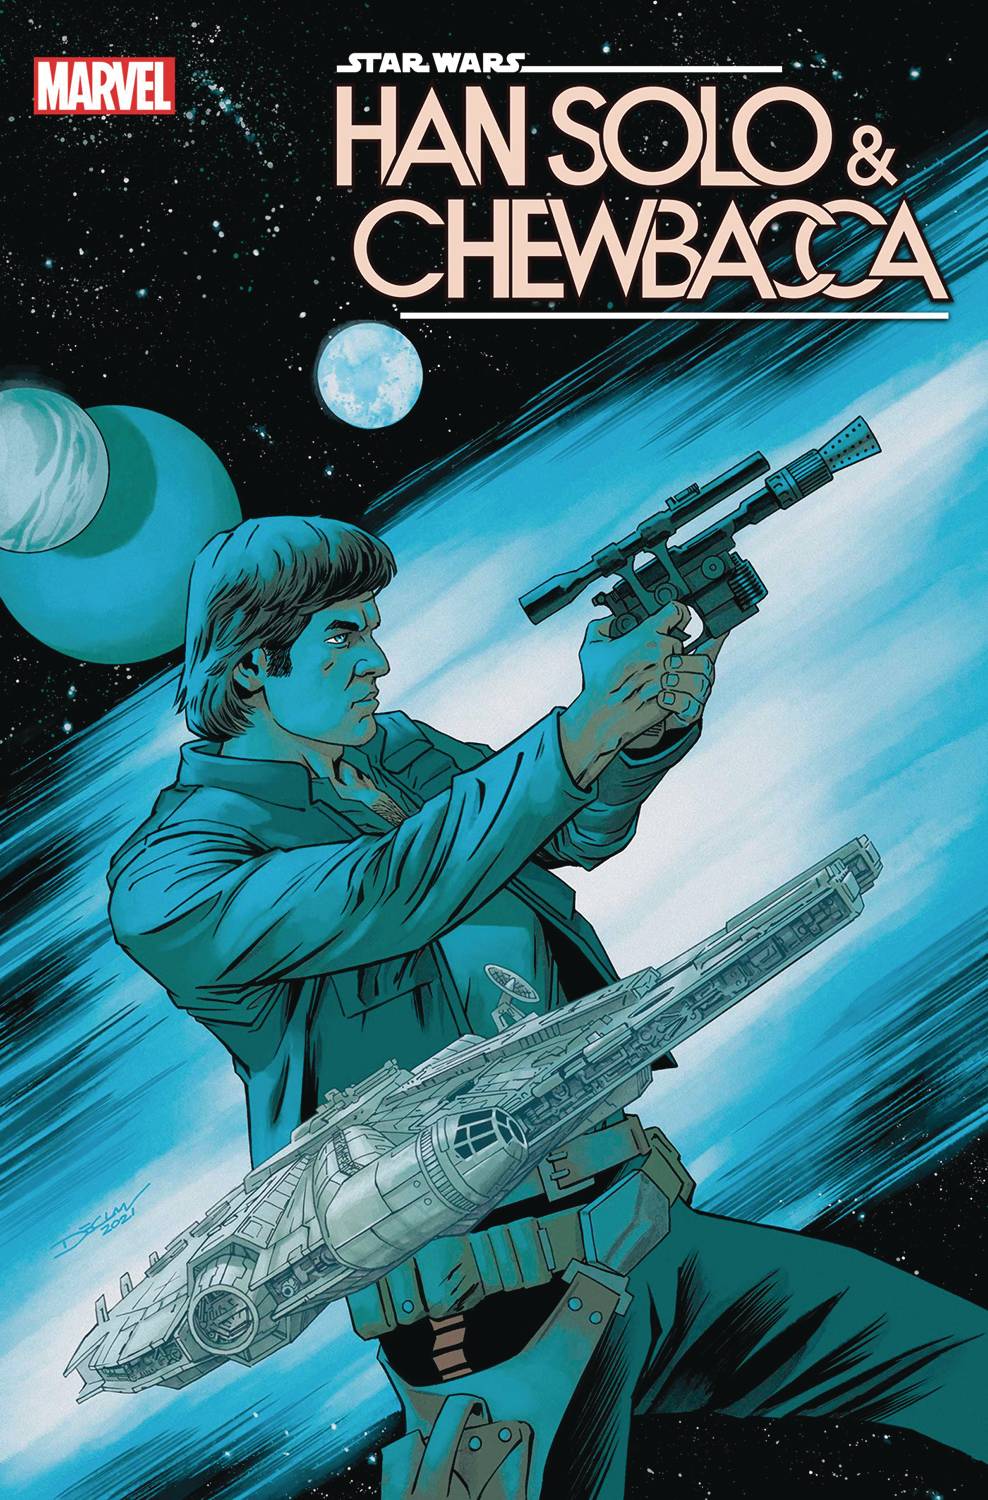 STAR WARS: HAN SOLO & CHEWBACCA #1 SHALVEY COVER - Third Eye